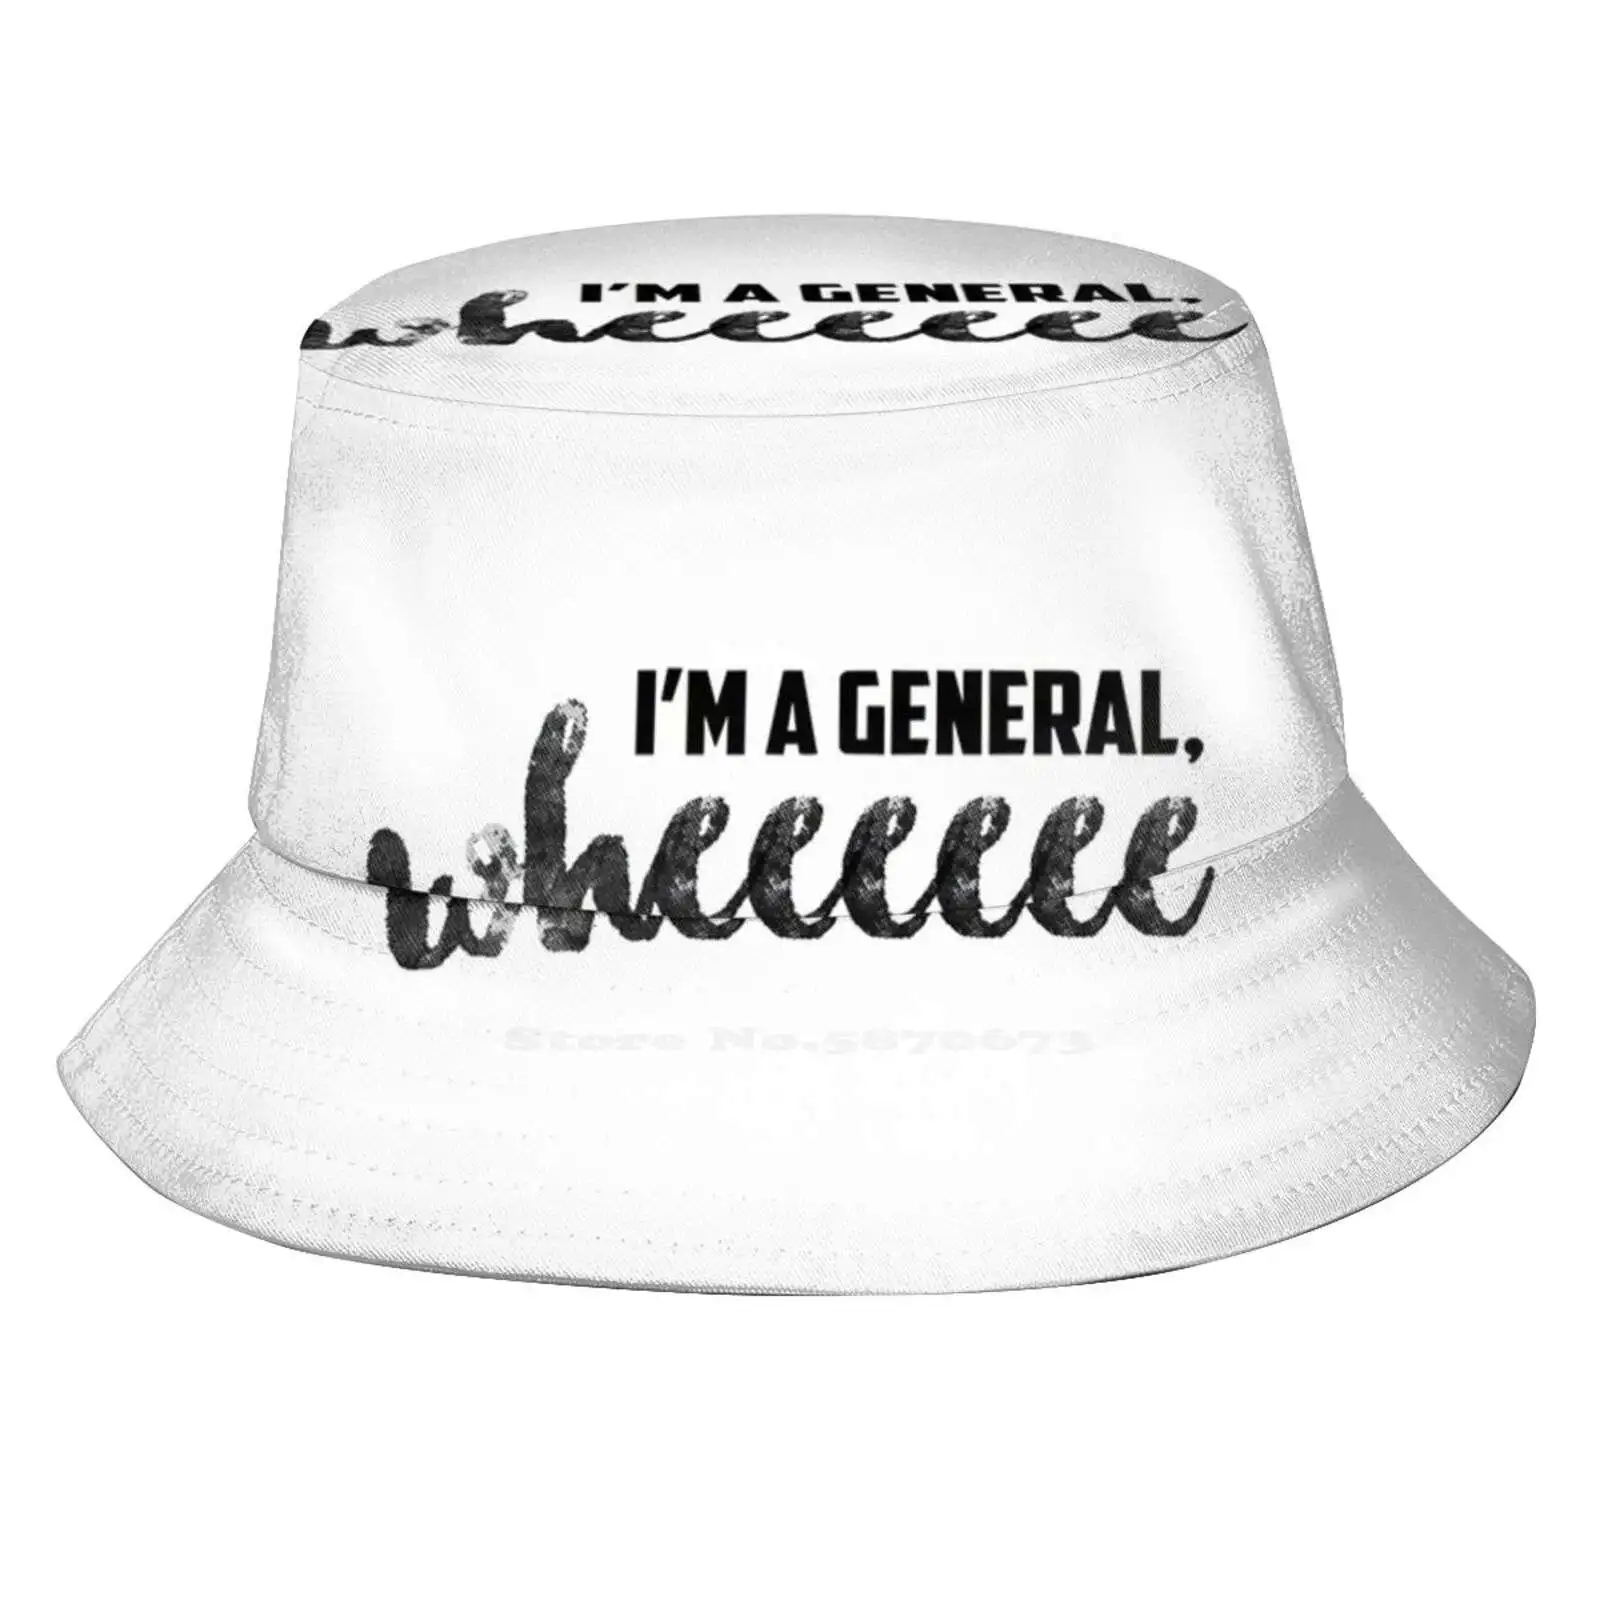 

Я генерал, Wheeeeee печать Панама шляпа от солнца Музыкальный Lin Мануэль Миранда Бродвей Музыкальный театр